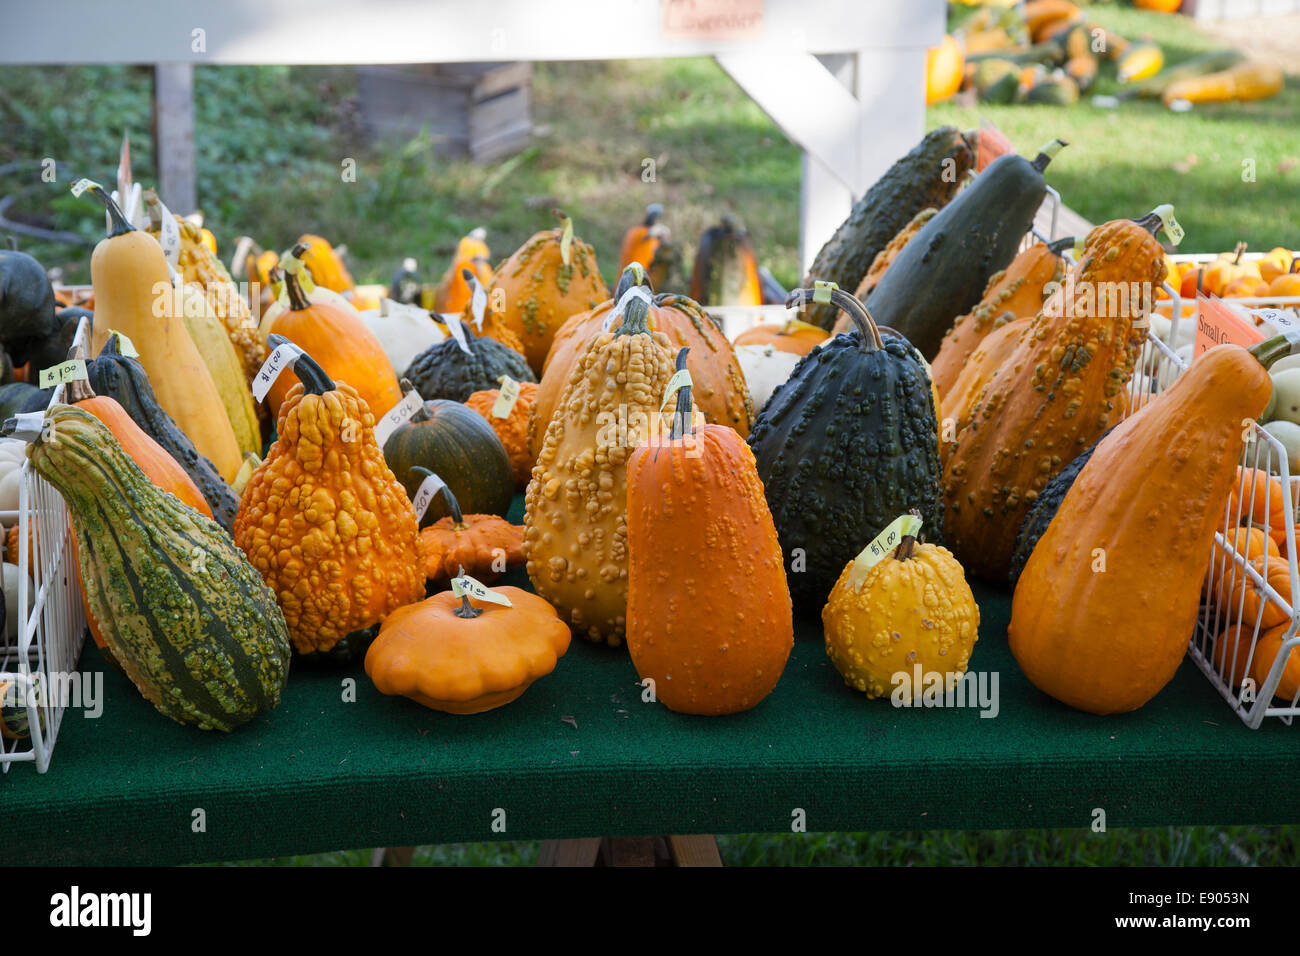 Pumpkins Squash and Gourds on display E USA Stock Photo